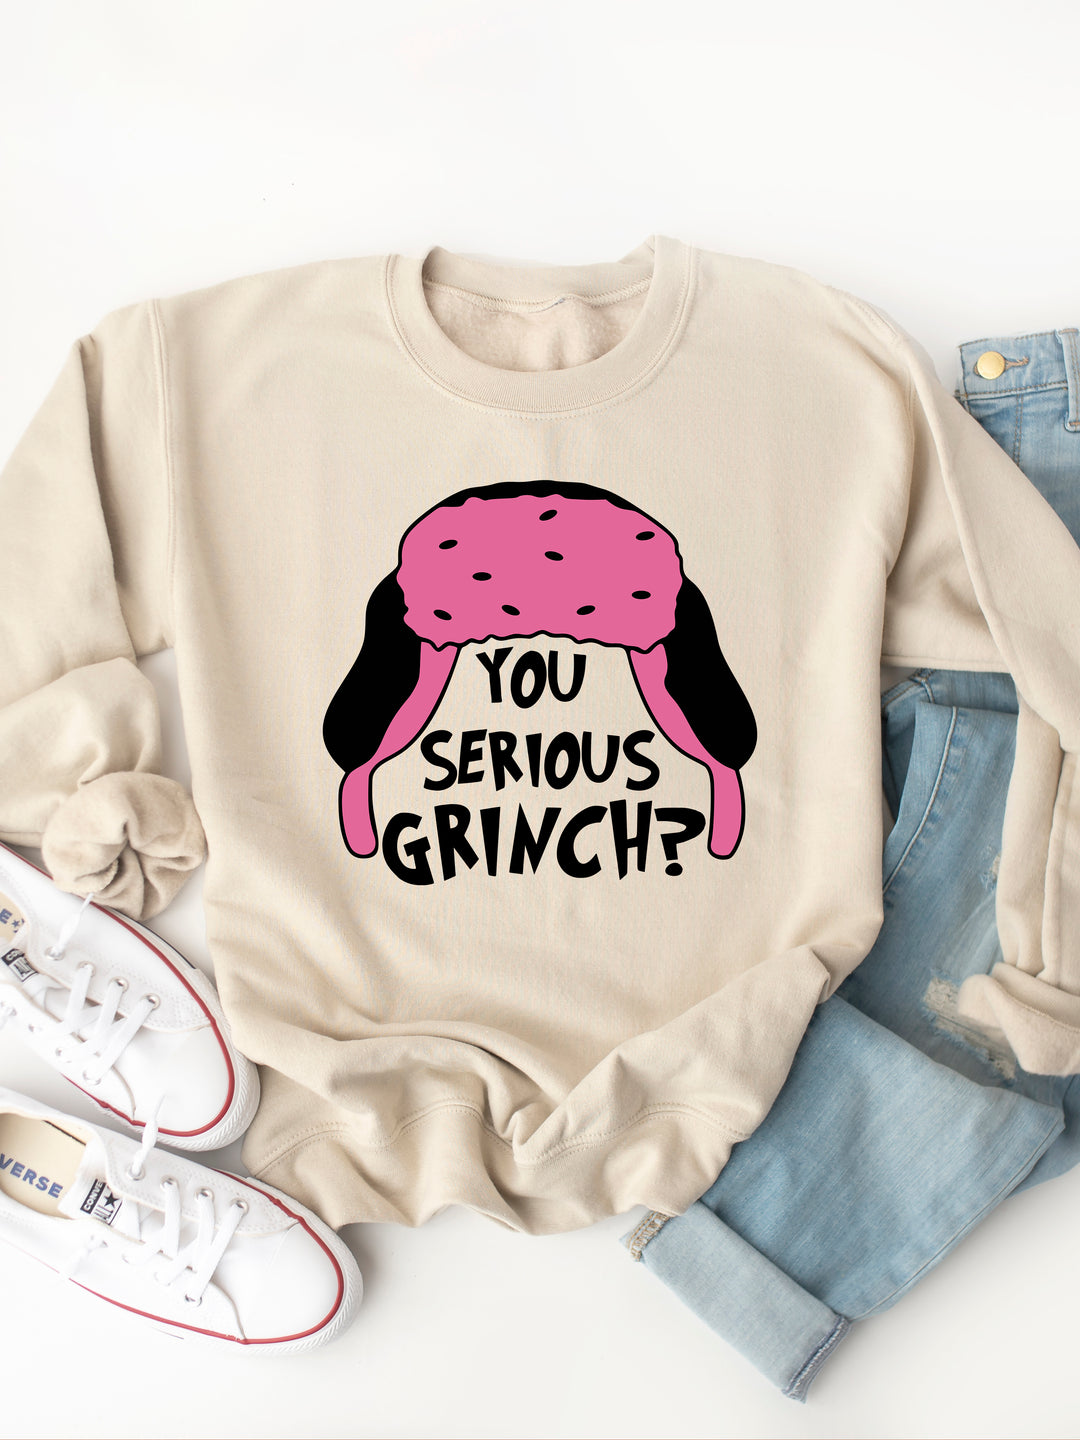 You Serious Grinch? - Graphic Sweatshirt